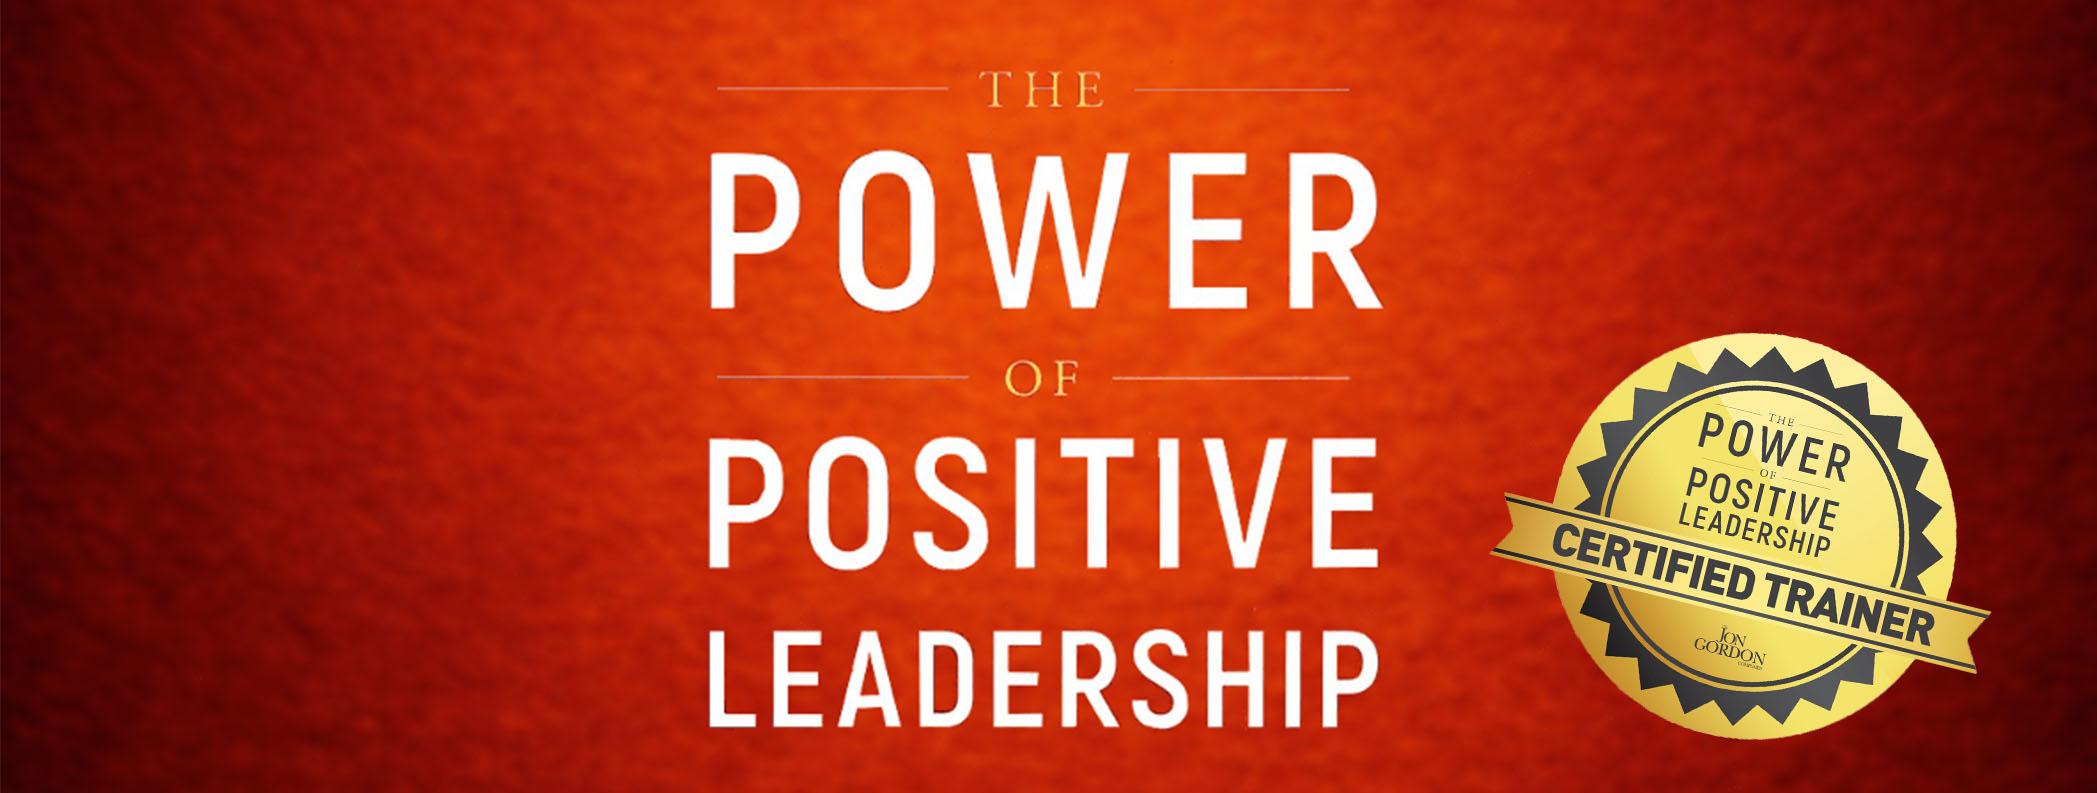 Power of Positive Leadership Training (at PB Dye Golf Club)